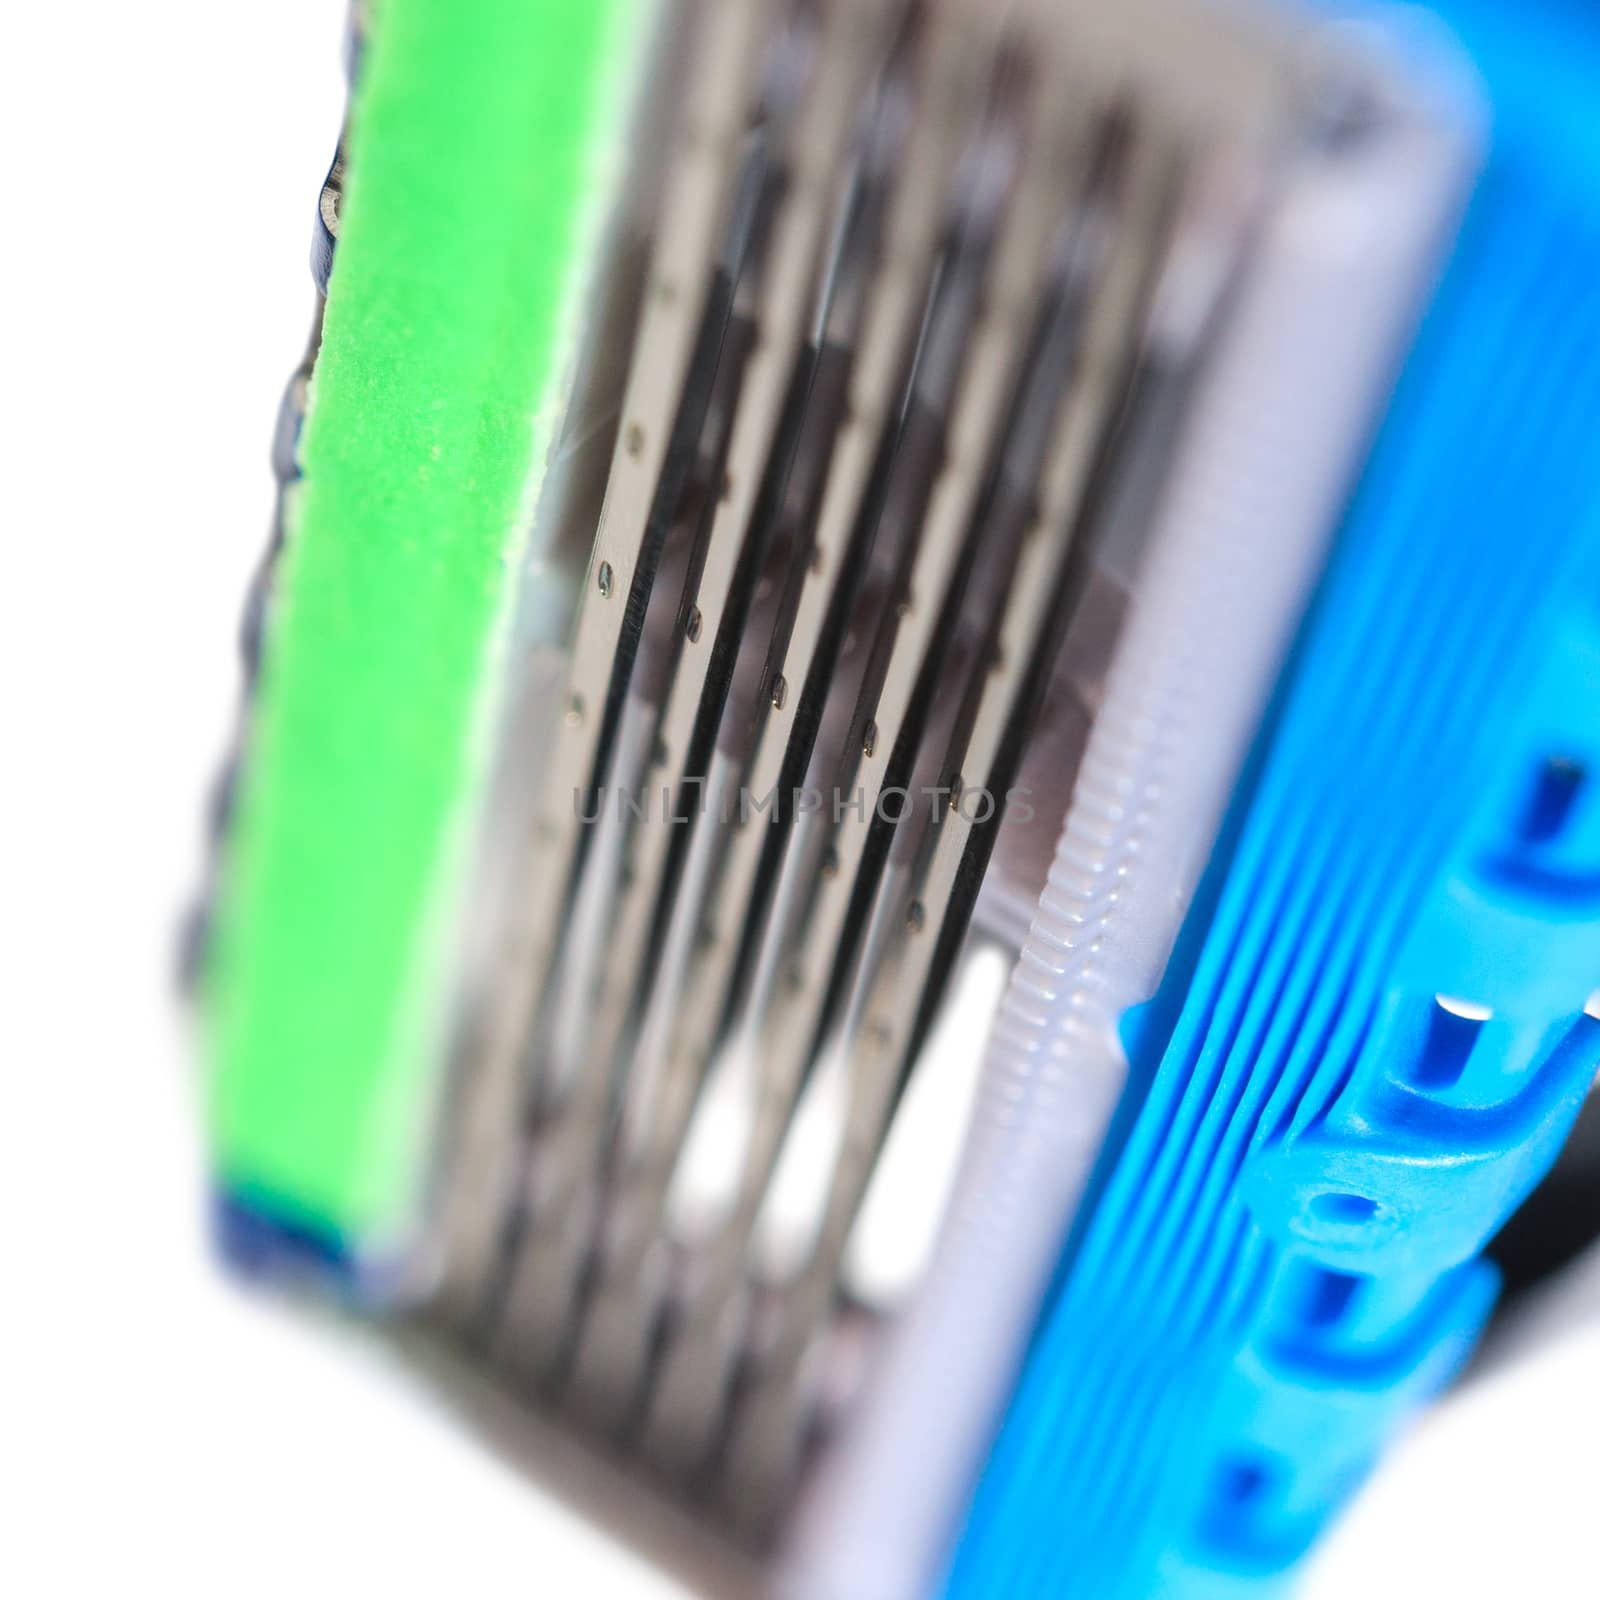 Sharp steel blades of cartridge for safety disposable shaving razor